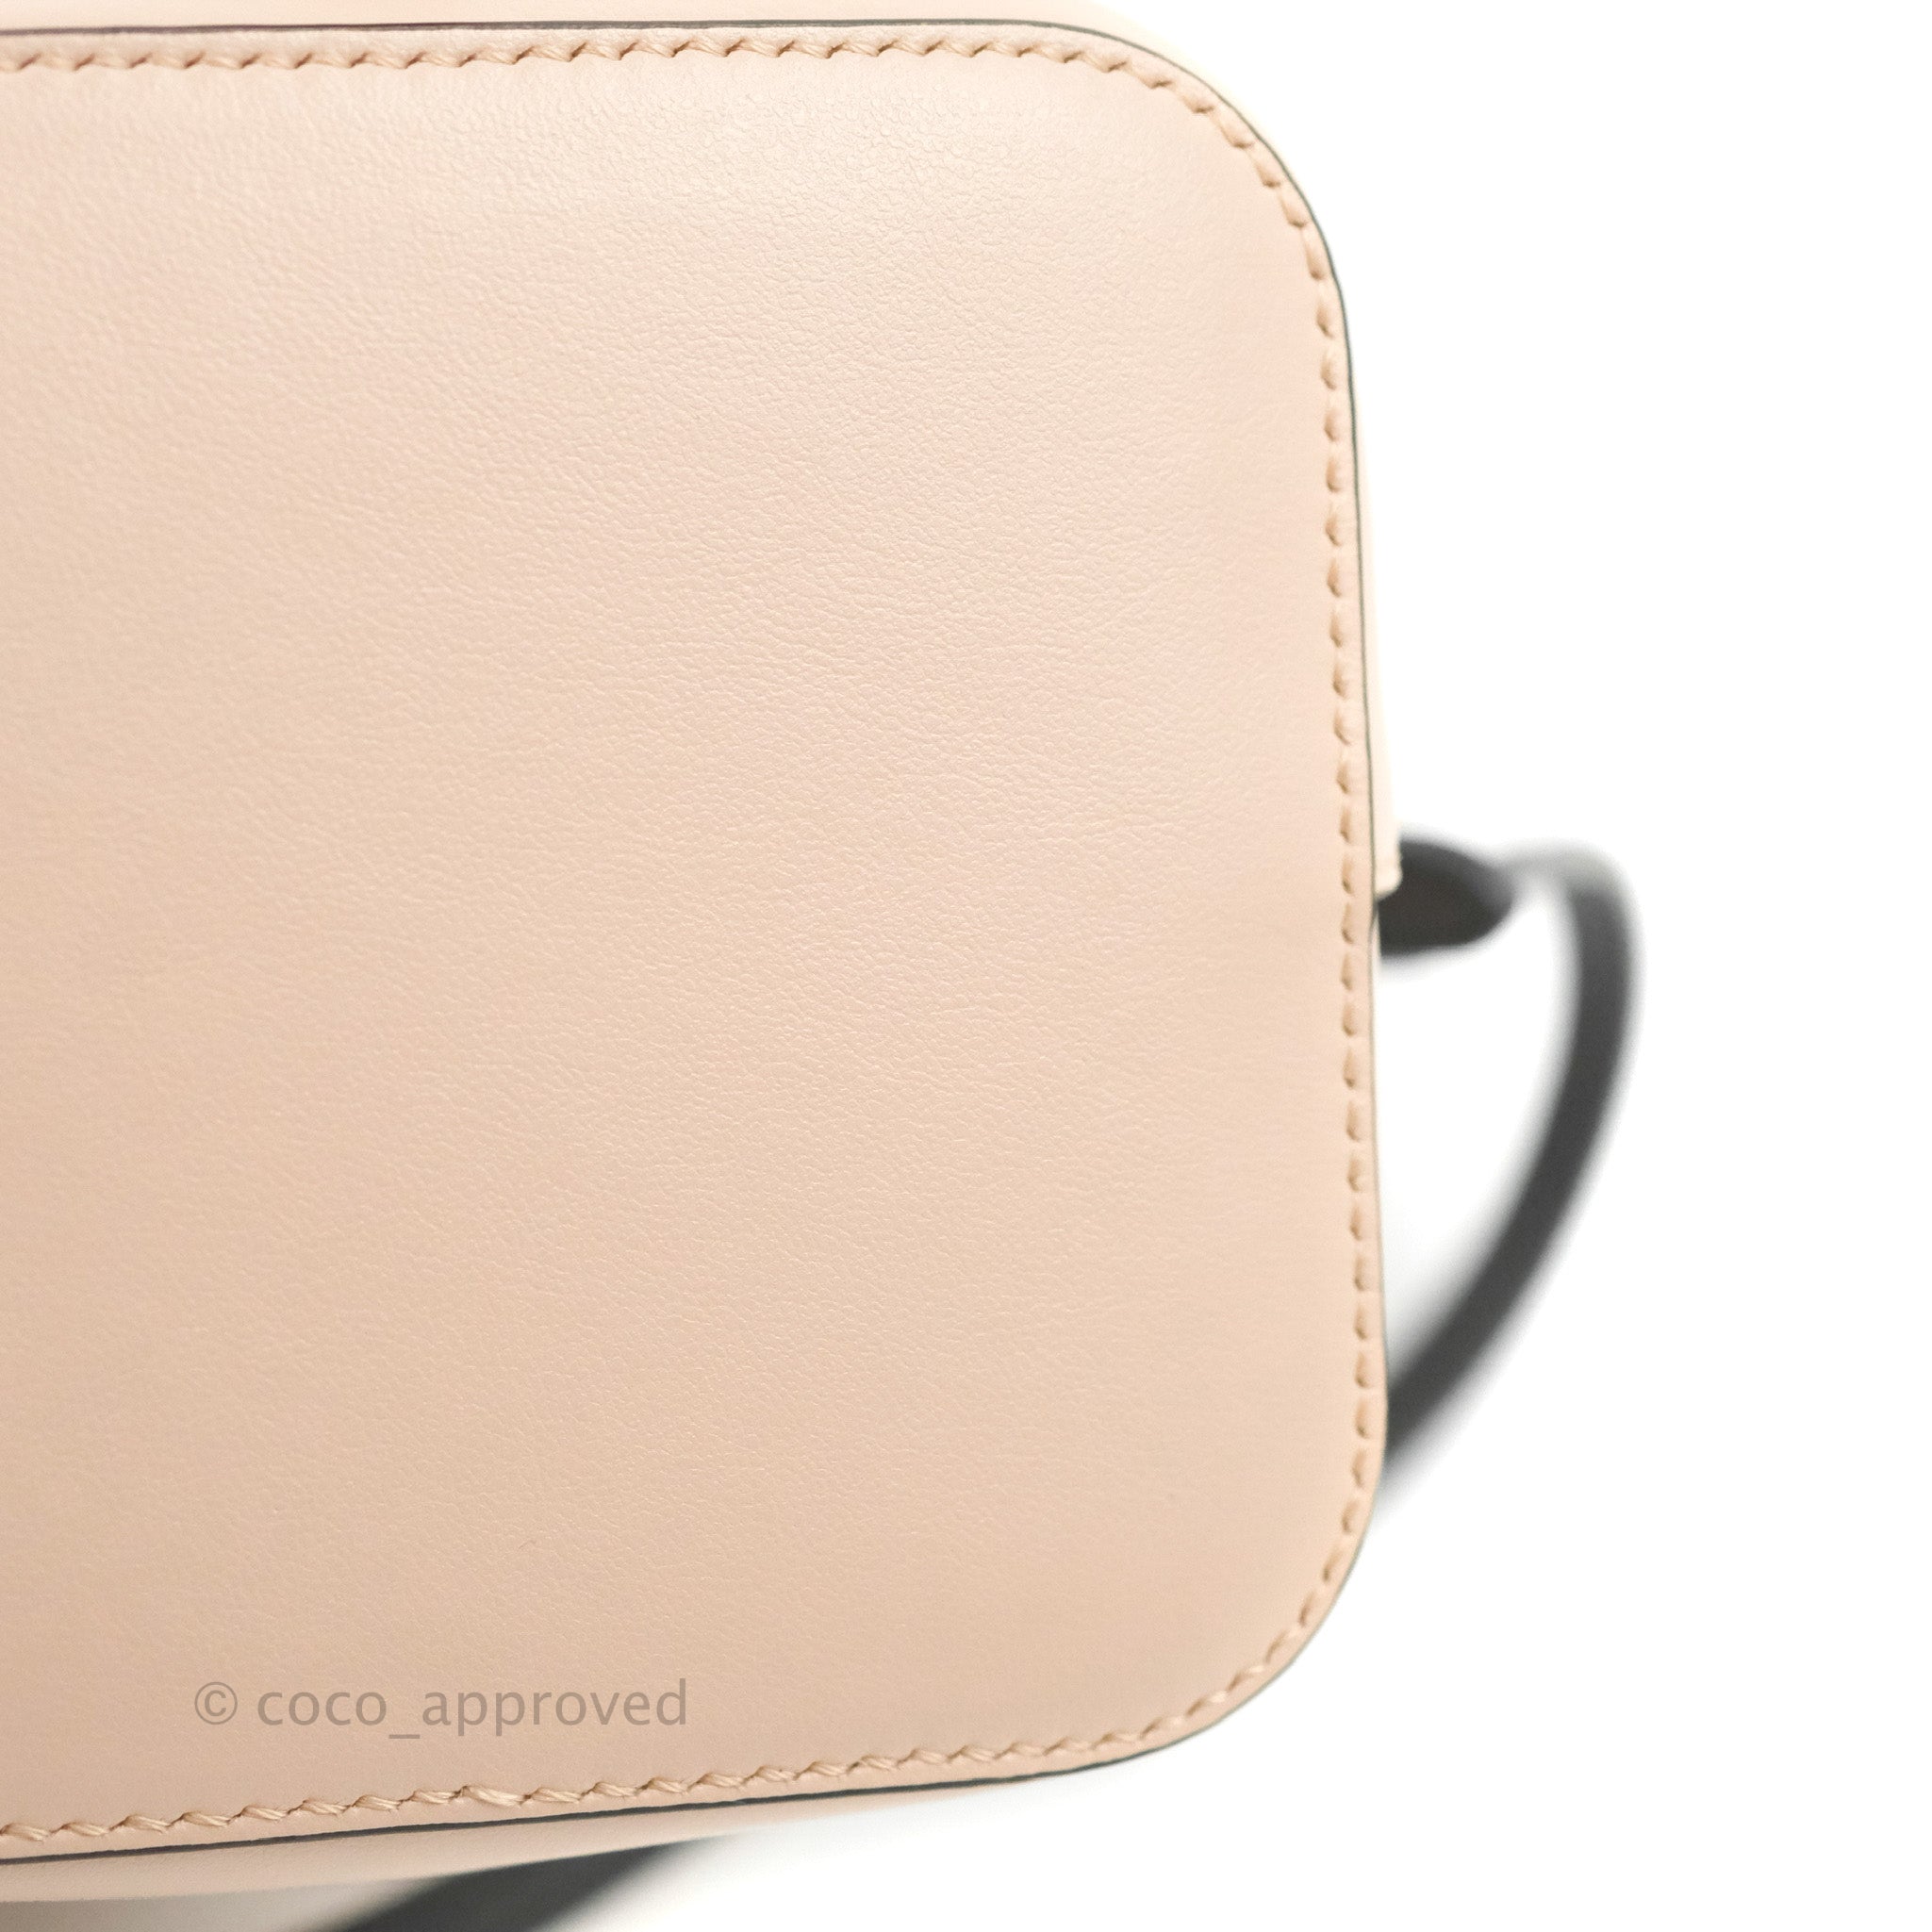 Fendi Mon Tresor Bucket Bag Leather Mini Pink 432341